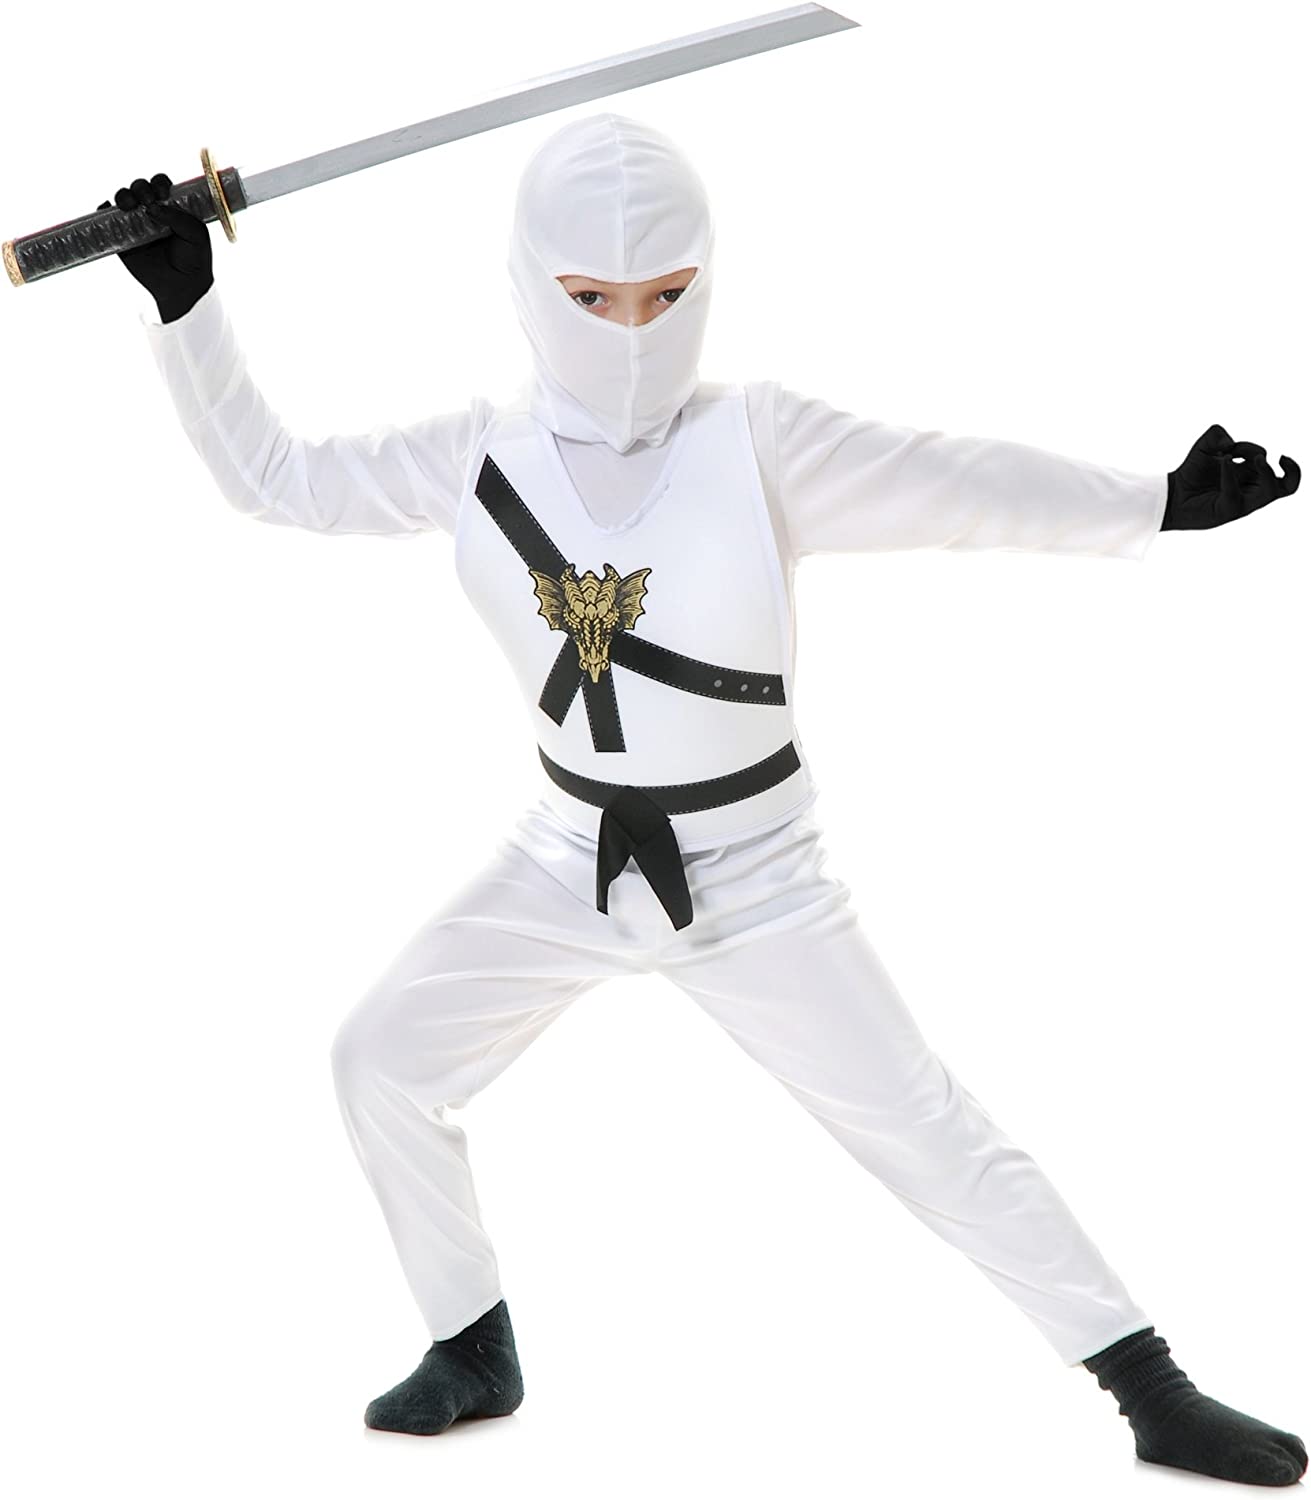 C. Ninja Avengers Series White